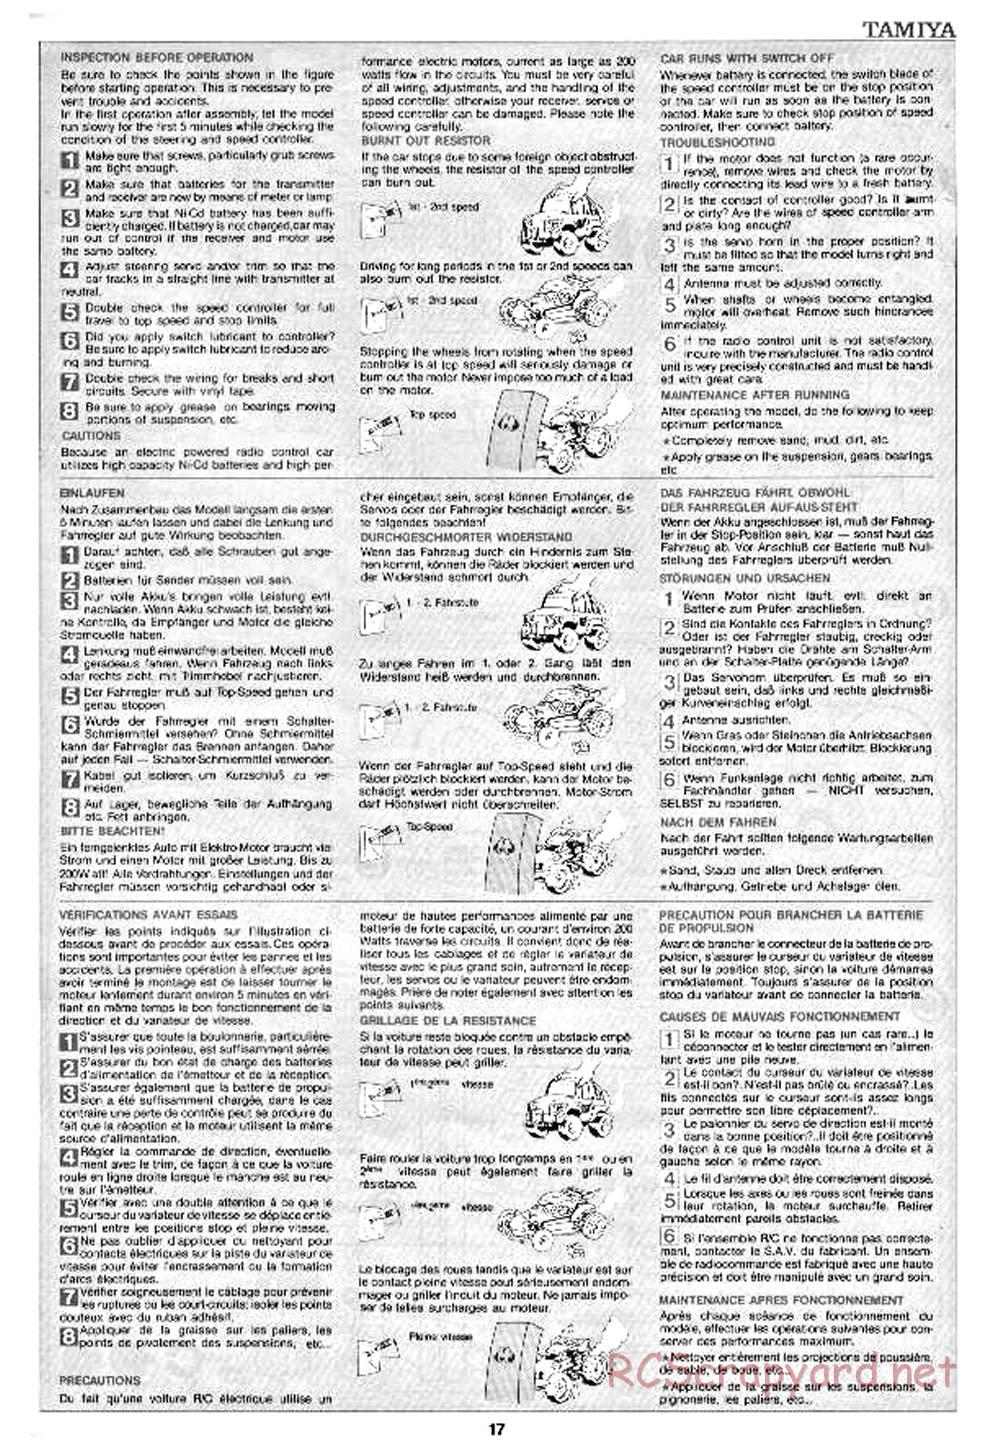 Tamiya - Lunchbox - 58063 - Manual - Page 17